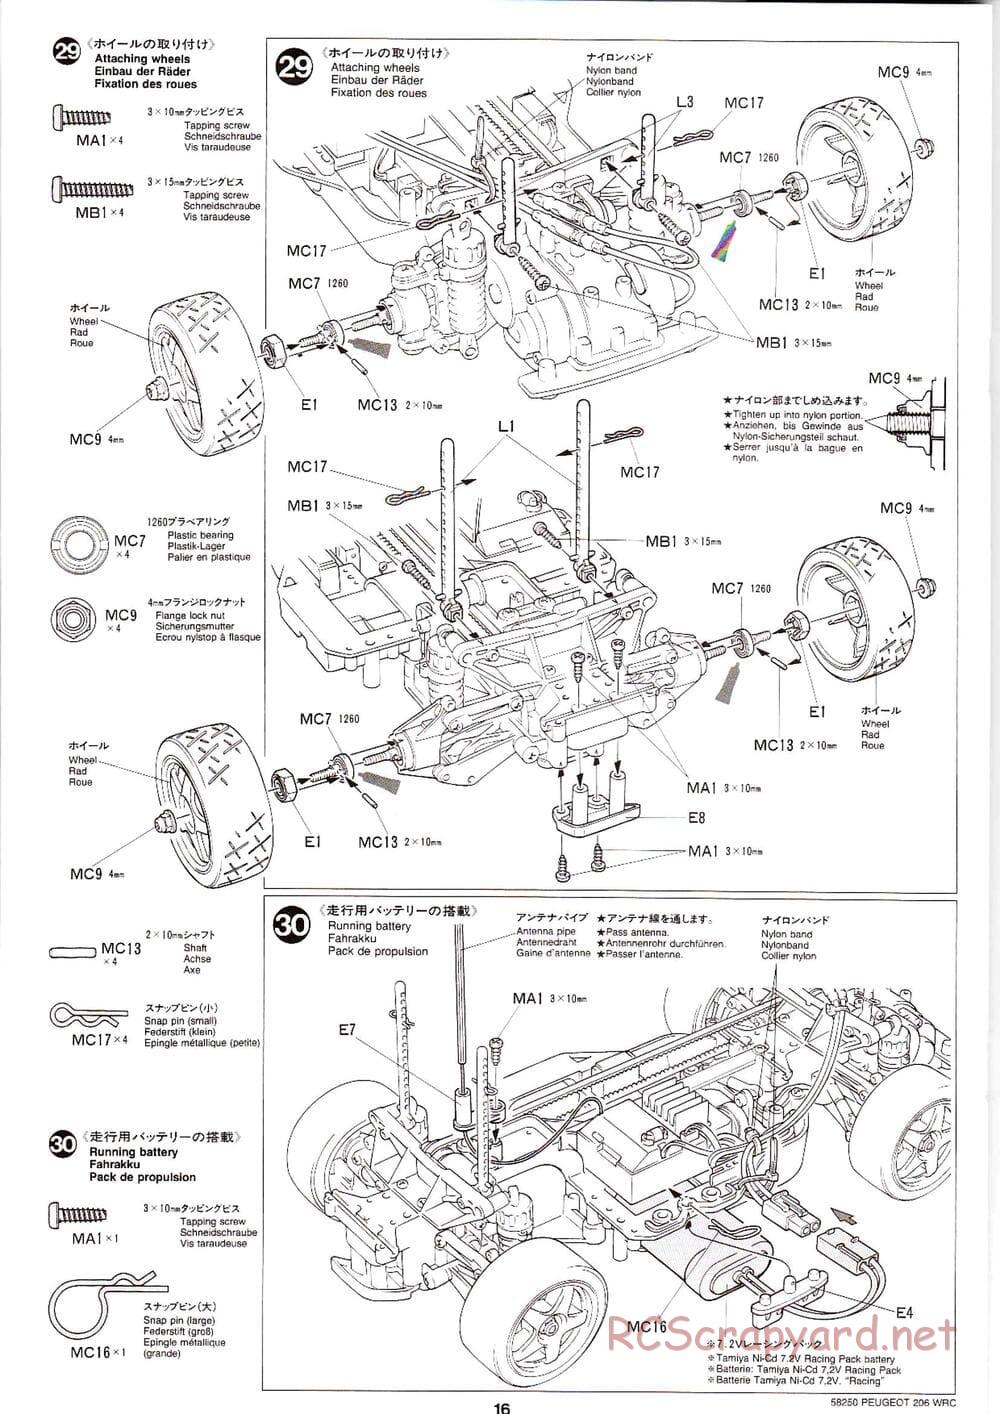 Tamiya - Peugeot 206 WRC - TA-03FS Chassis - Manual - Page 16